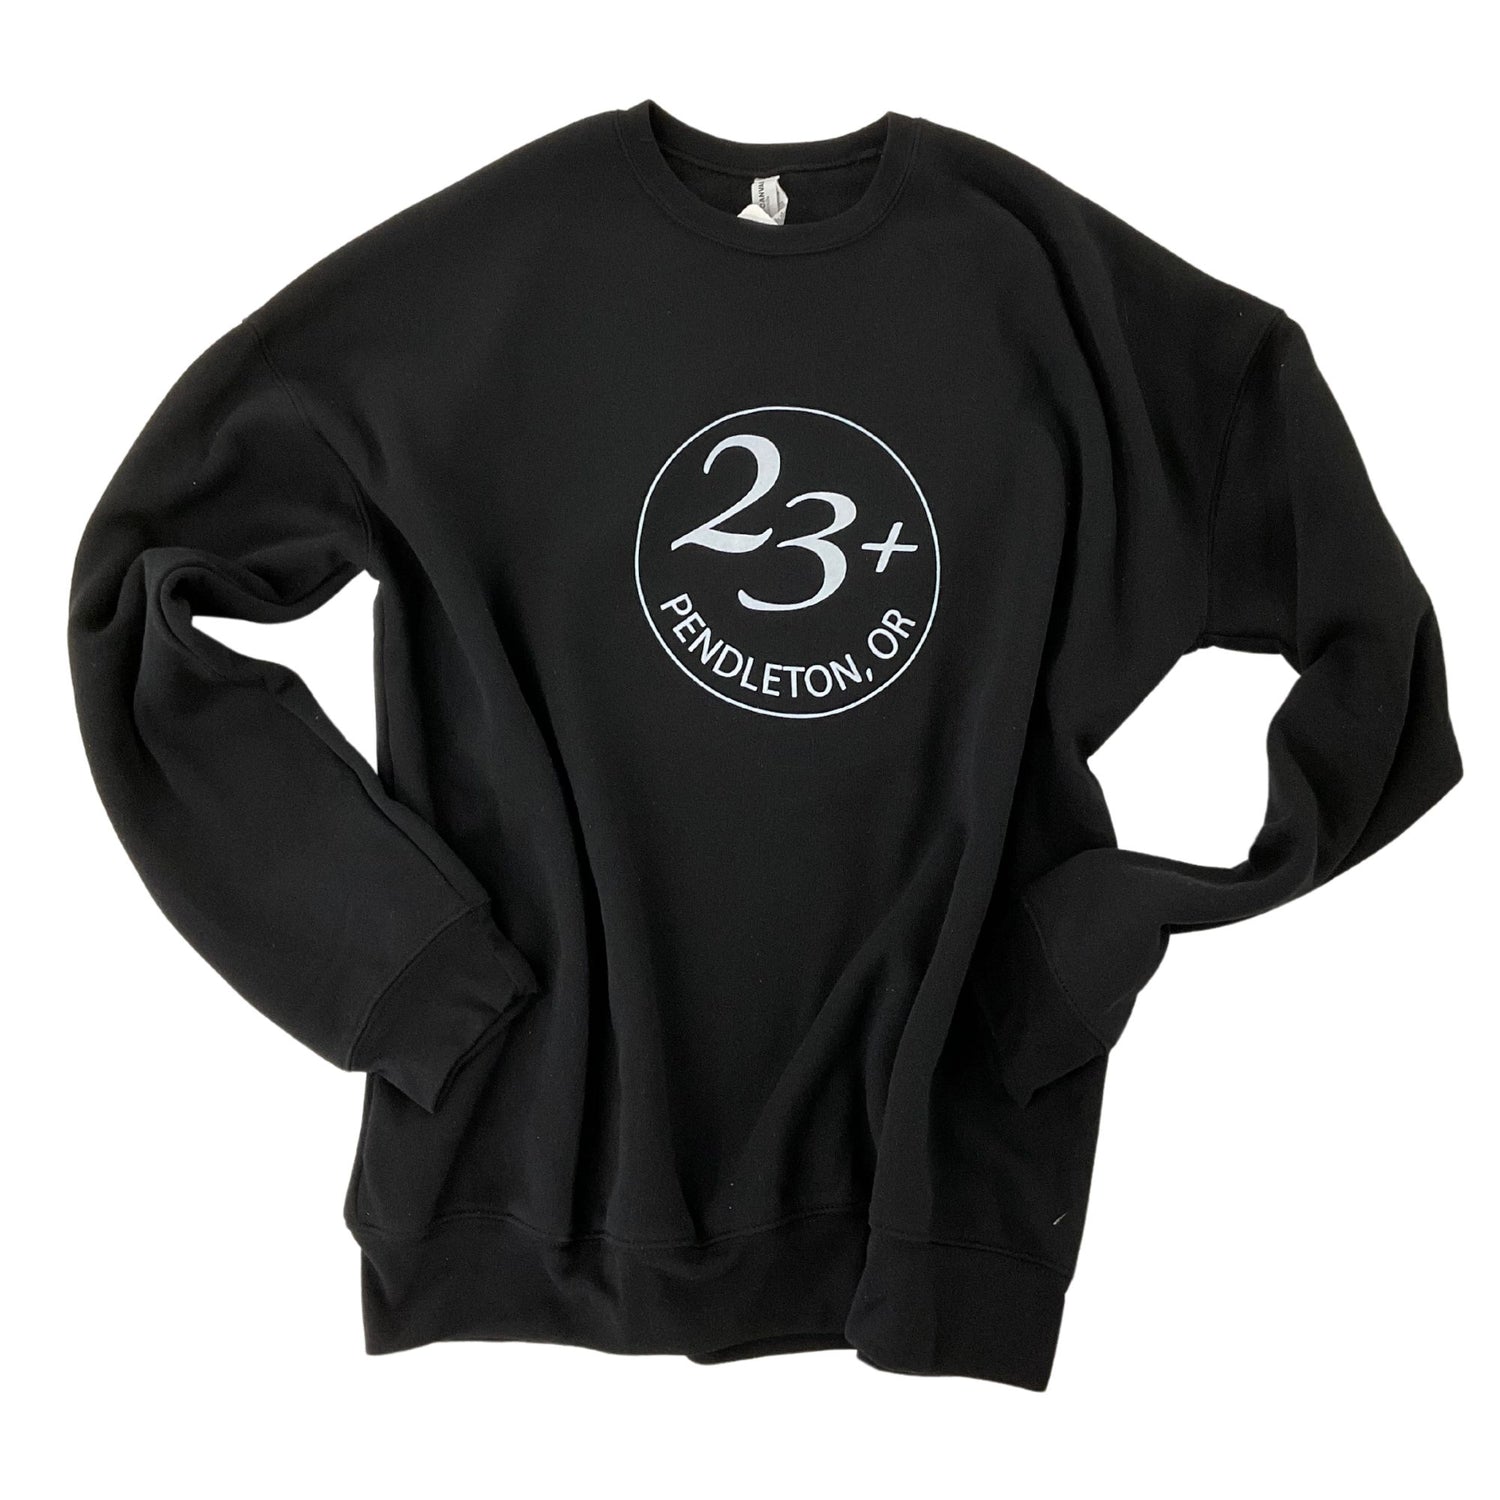 23+ Logo Crew Neck Sweatshirt - Black